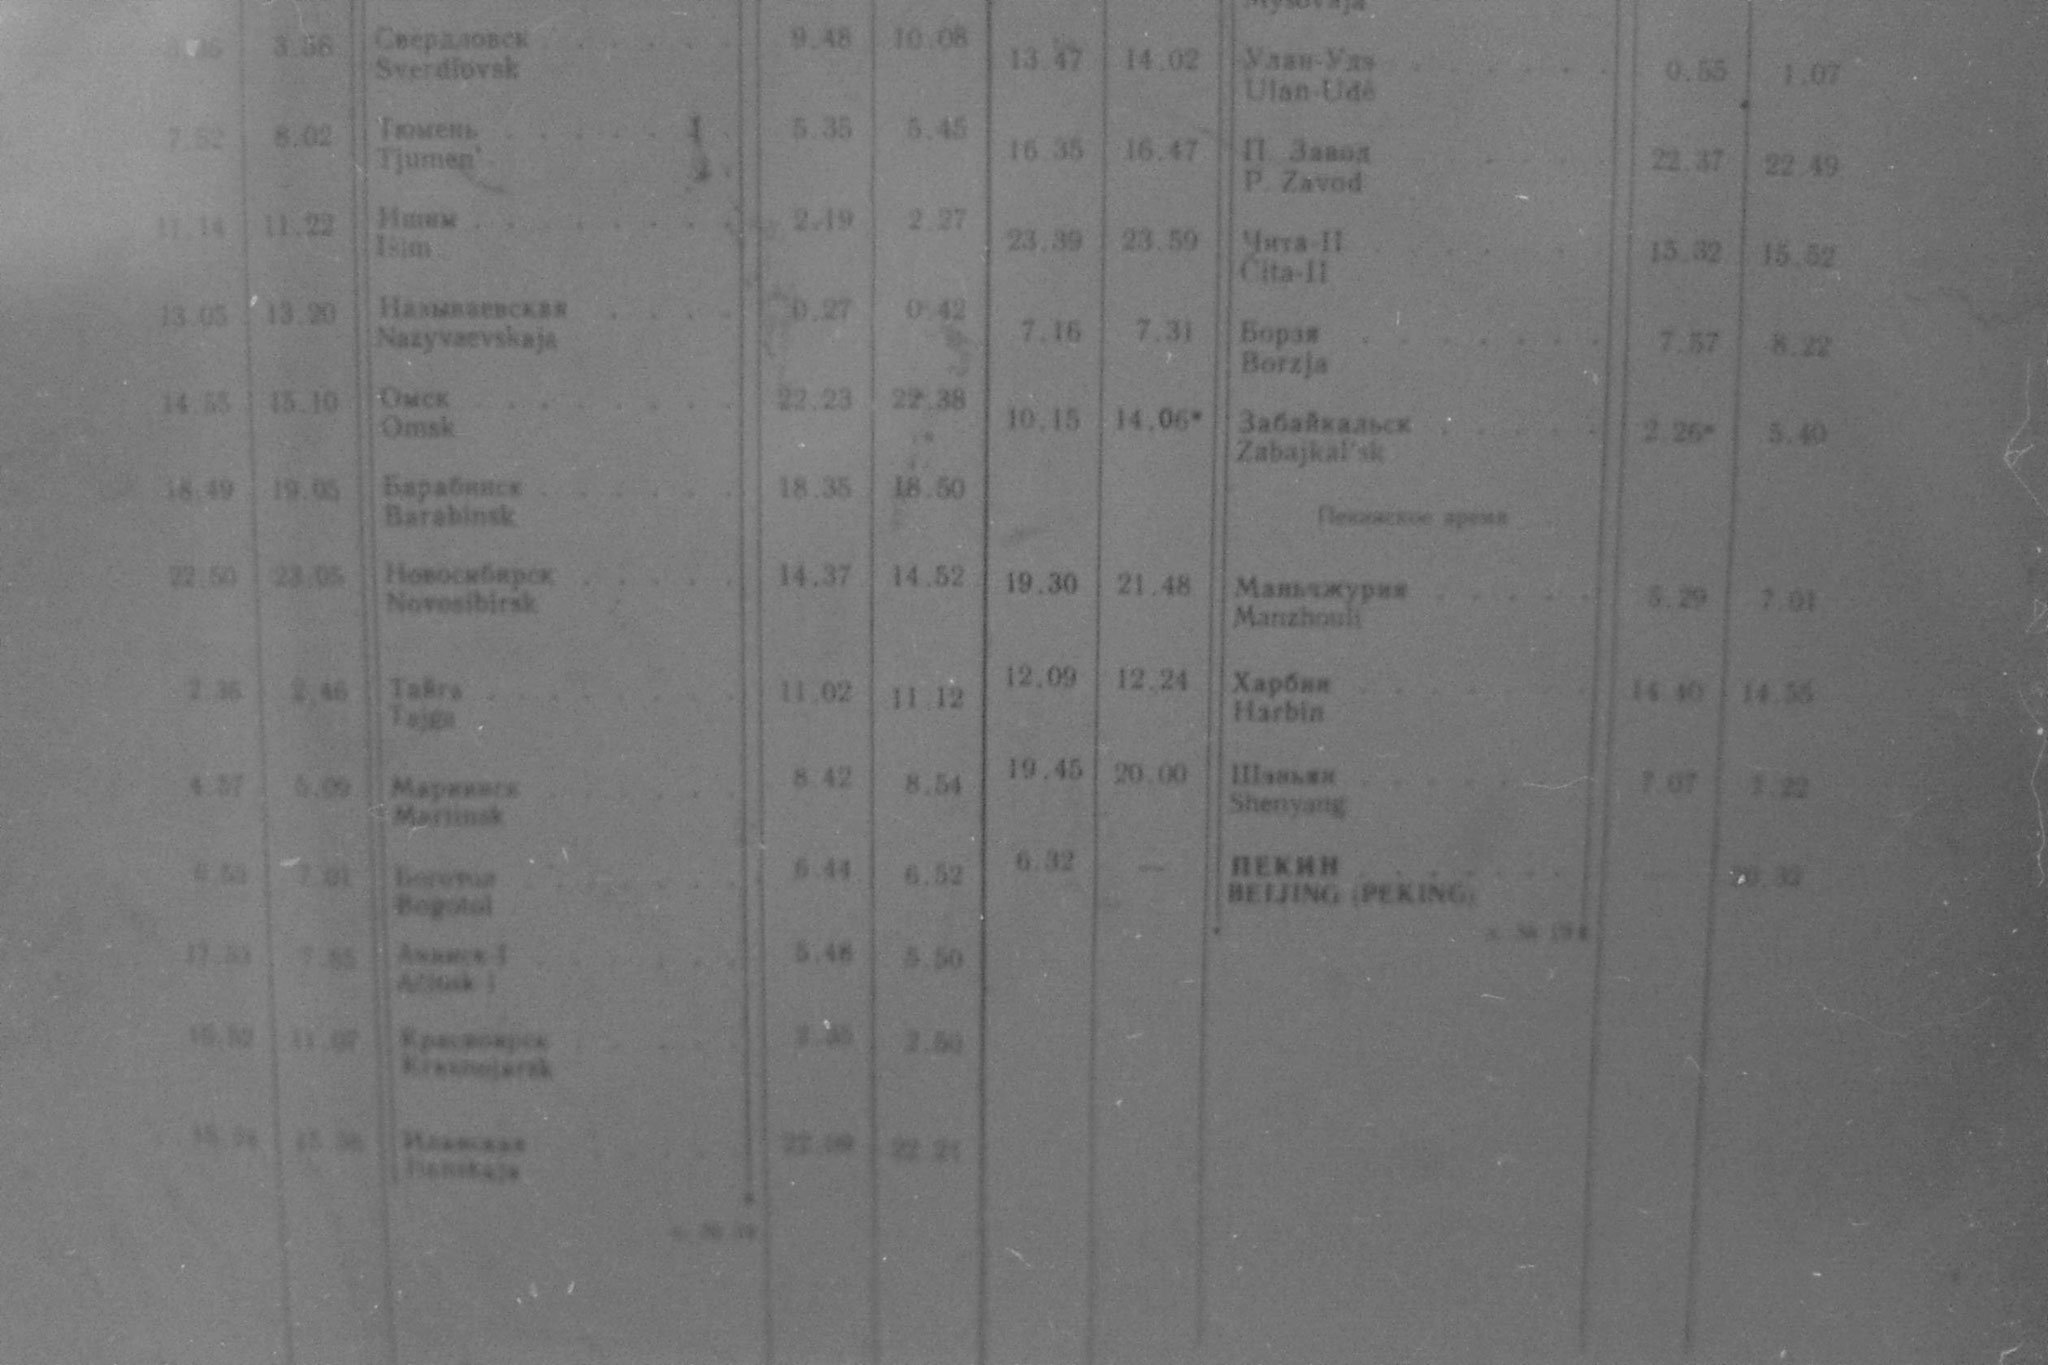 28/10/1988: 30: timetable